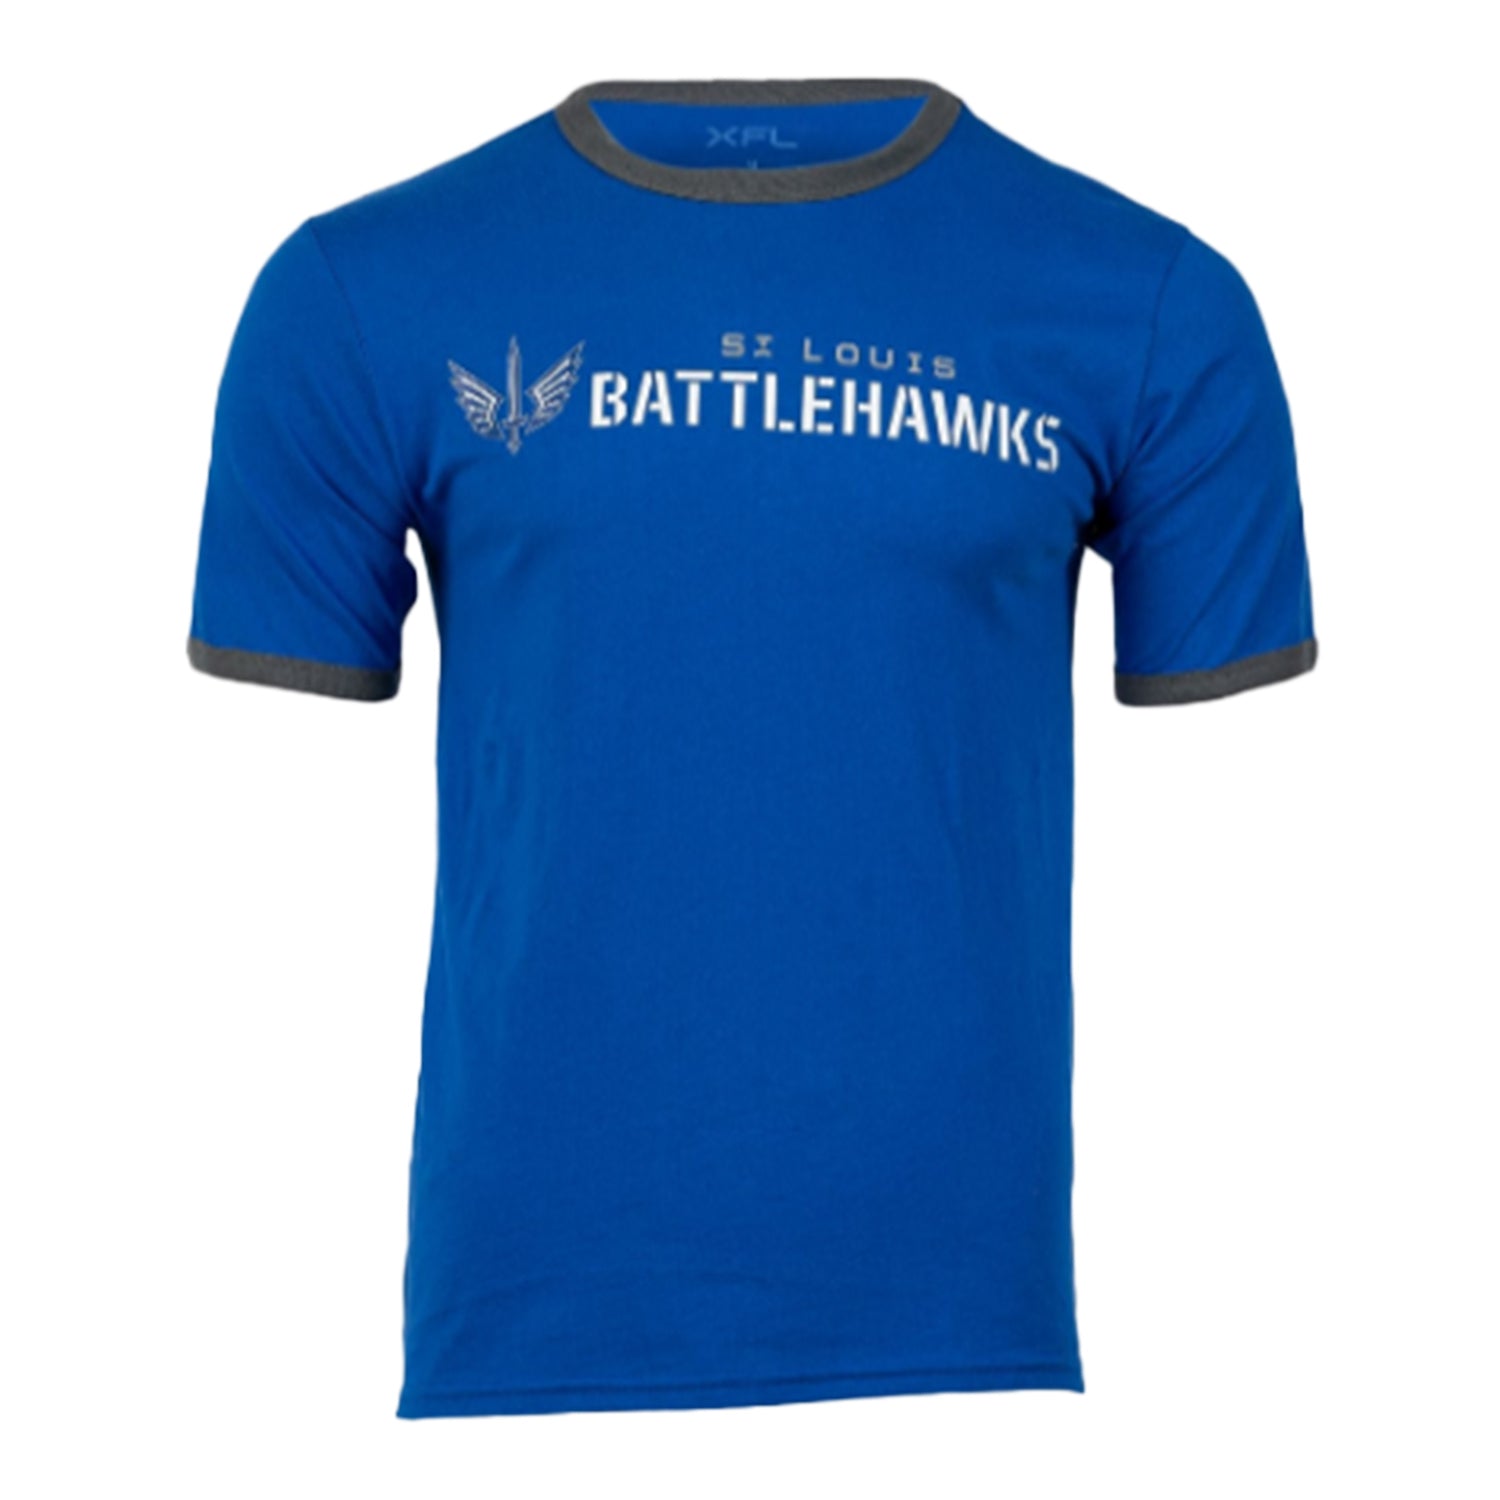 Battlehawks Primary Ringer Short Sleeve T-Shirt In Blue - Front View